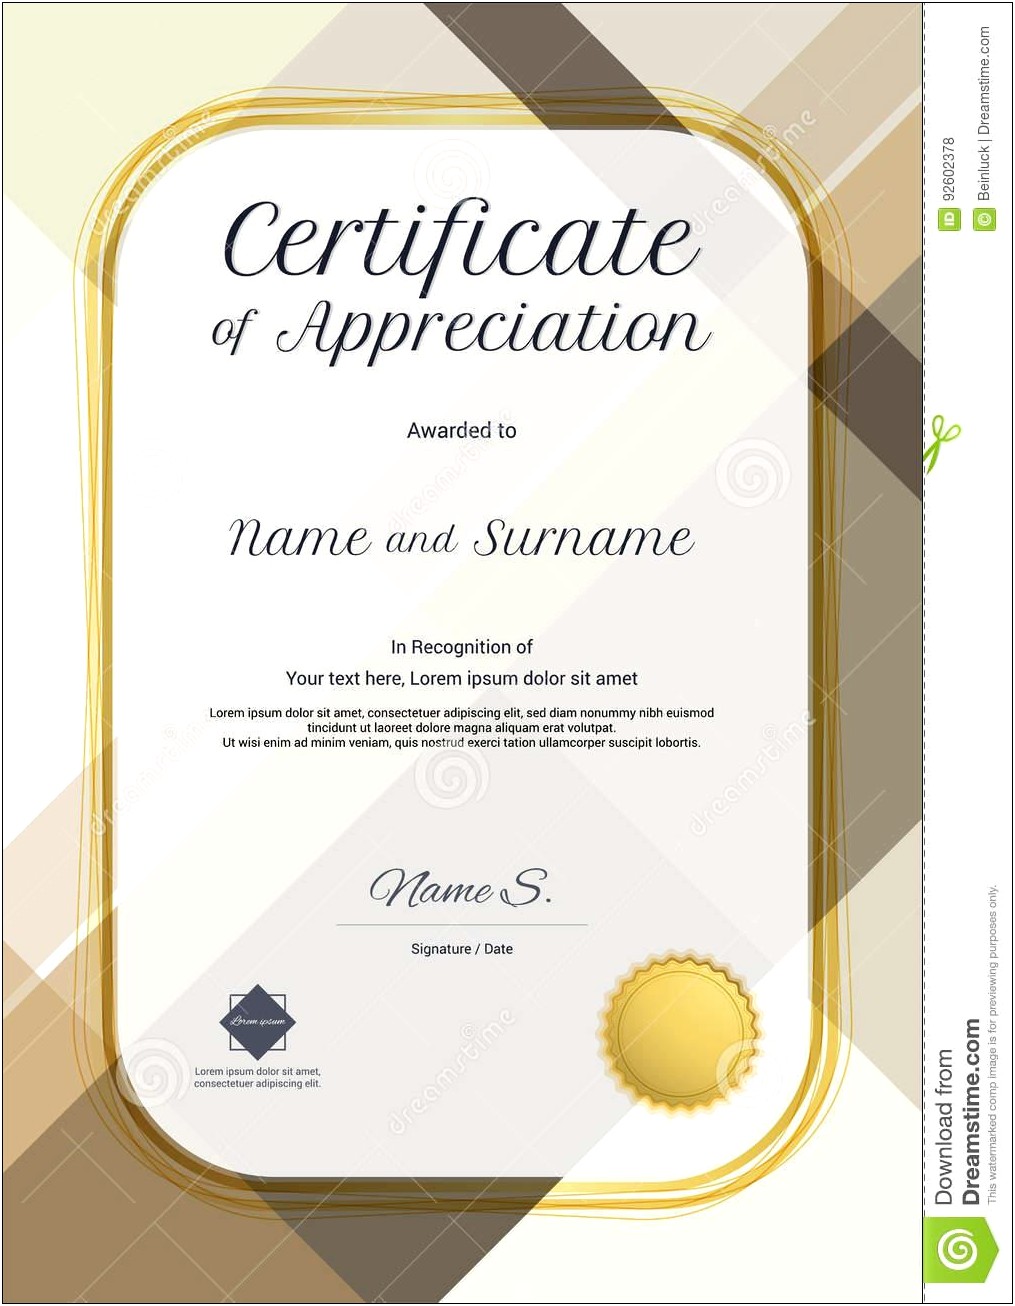 Certificate Of Appreciatation Template Free Parents